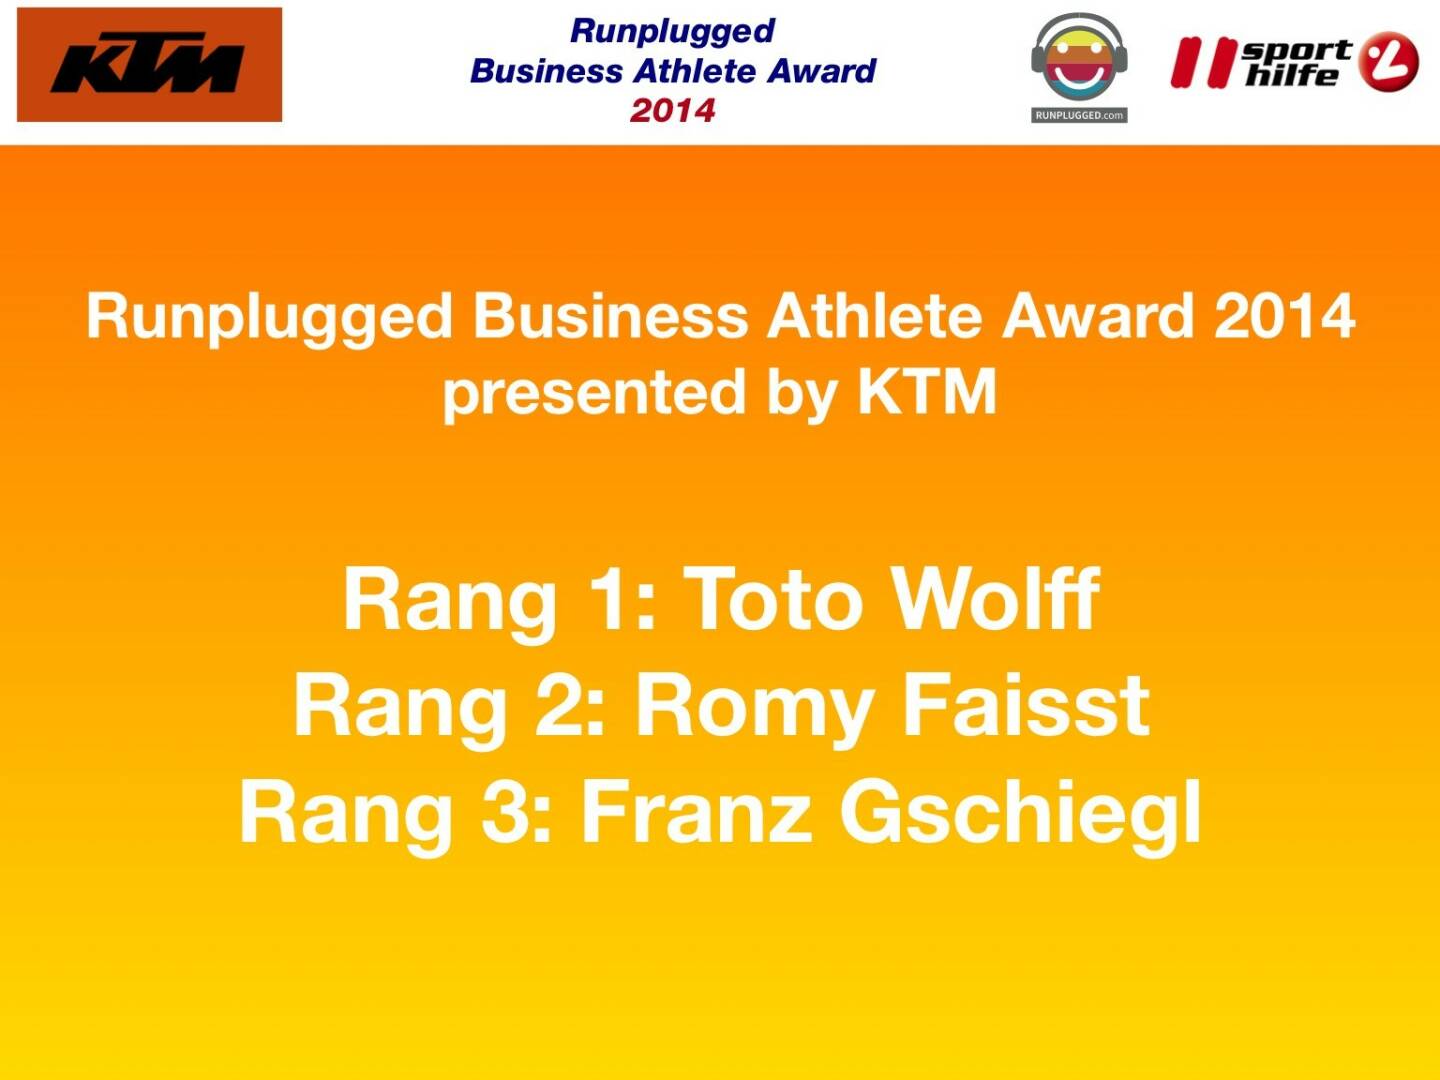 Runplugged Business Athlete Award 2014 presented by KTM : Rang 1: Toto Wolff, Rang 2: Romy Faisst, Rang 3: Franz Gschiegl